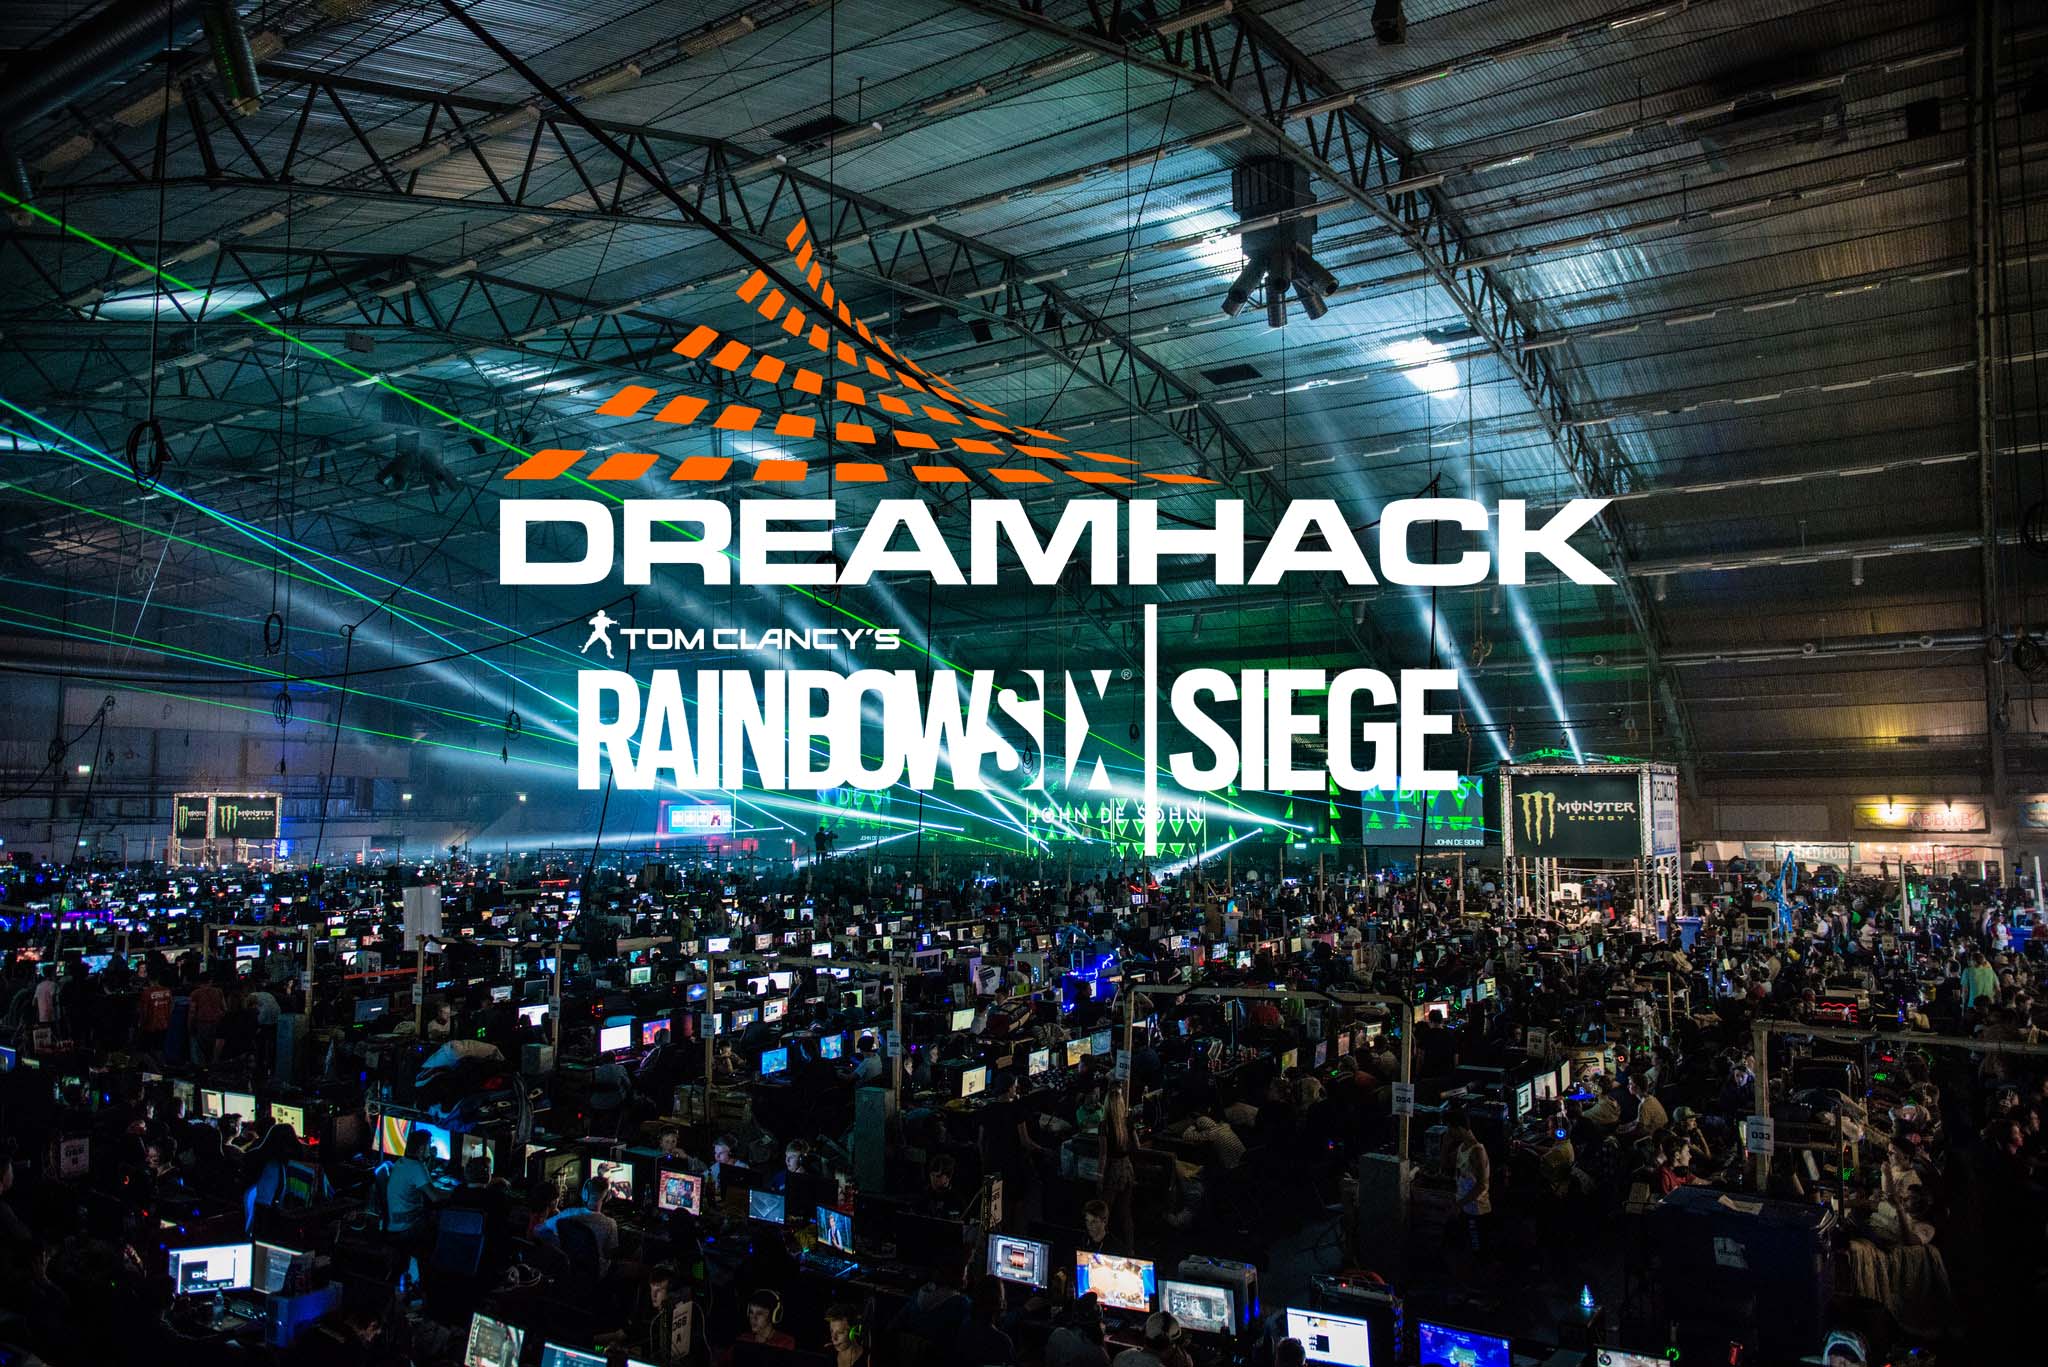 Rainbow Six Goes to DreamHack!